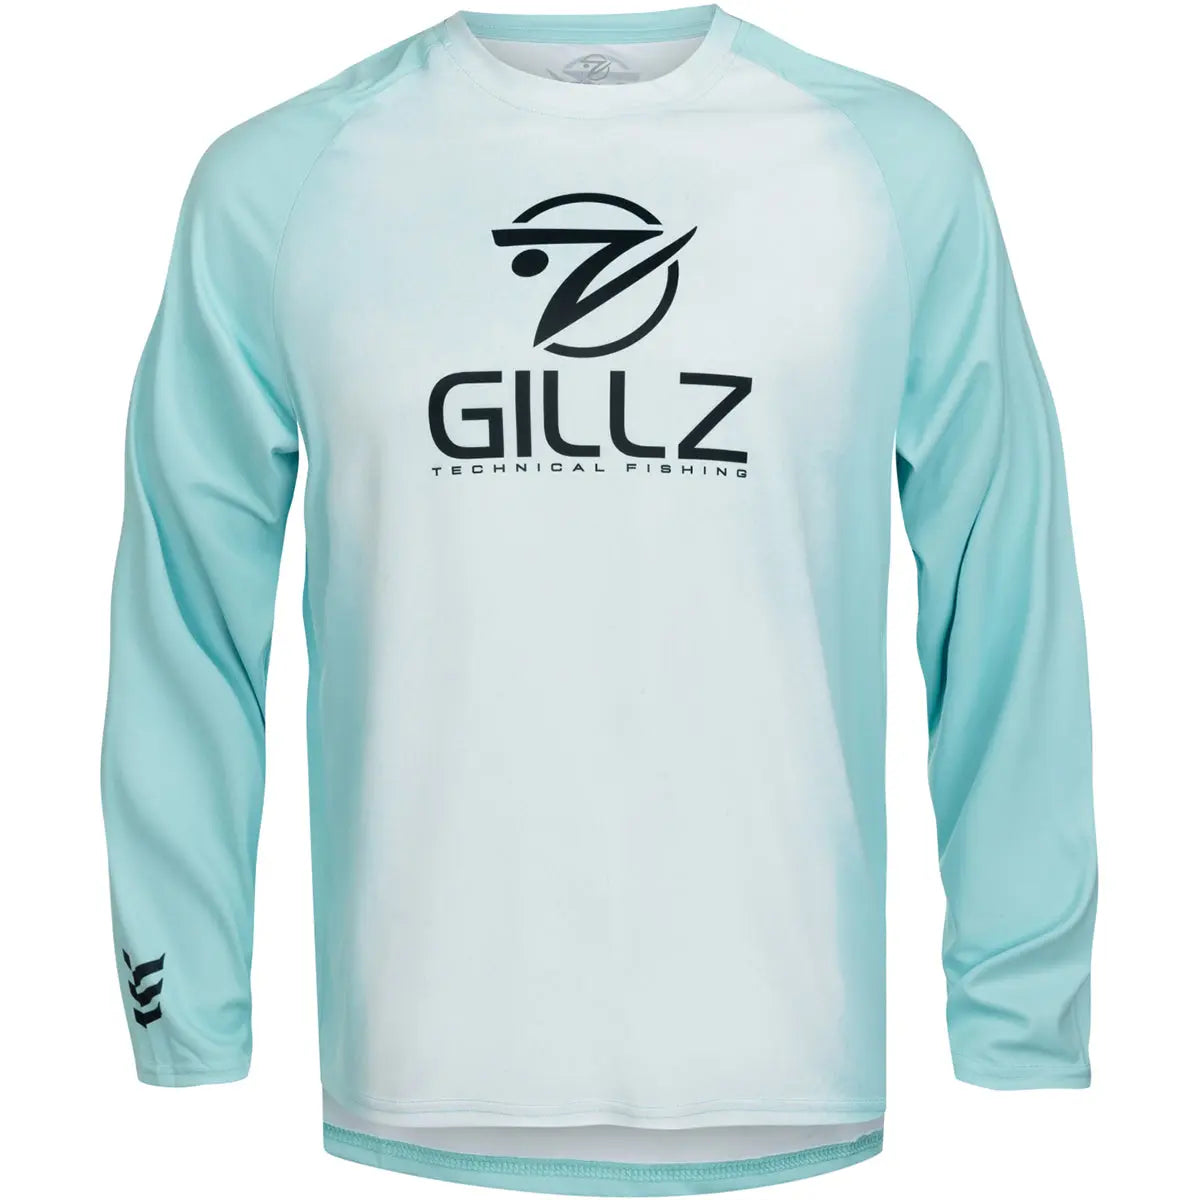 gillz, Shirts